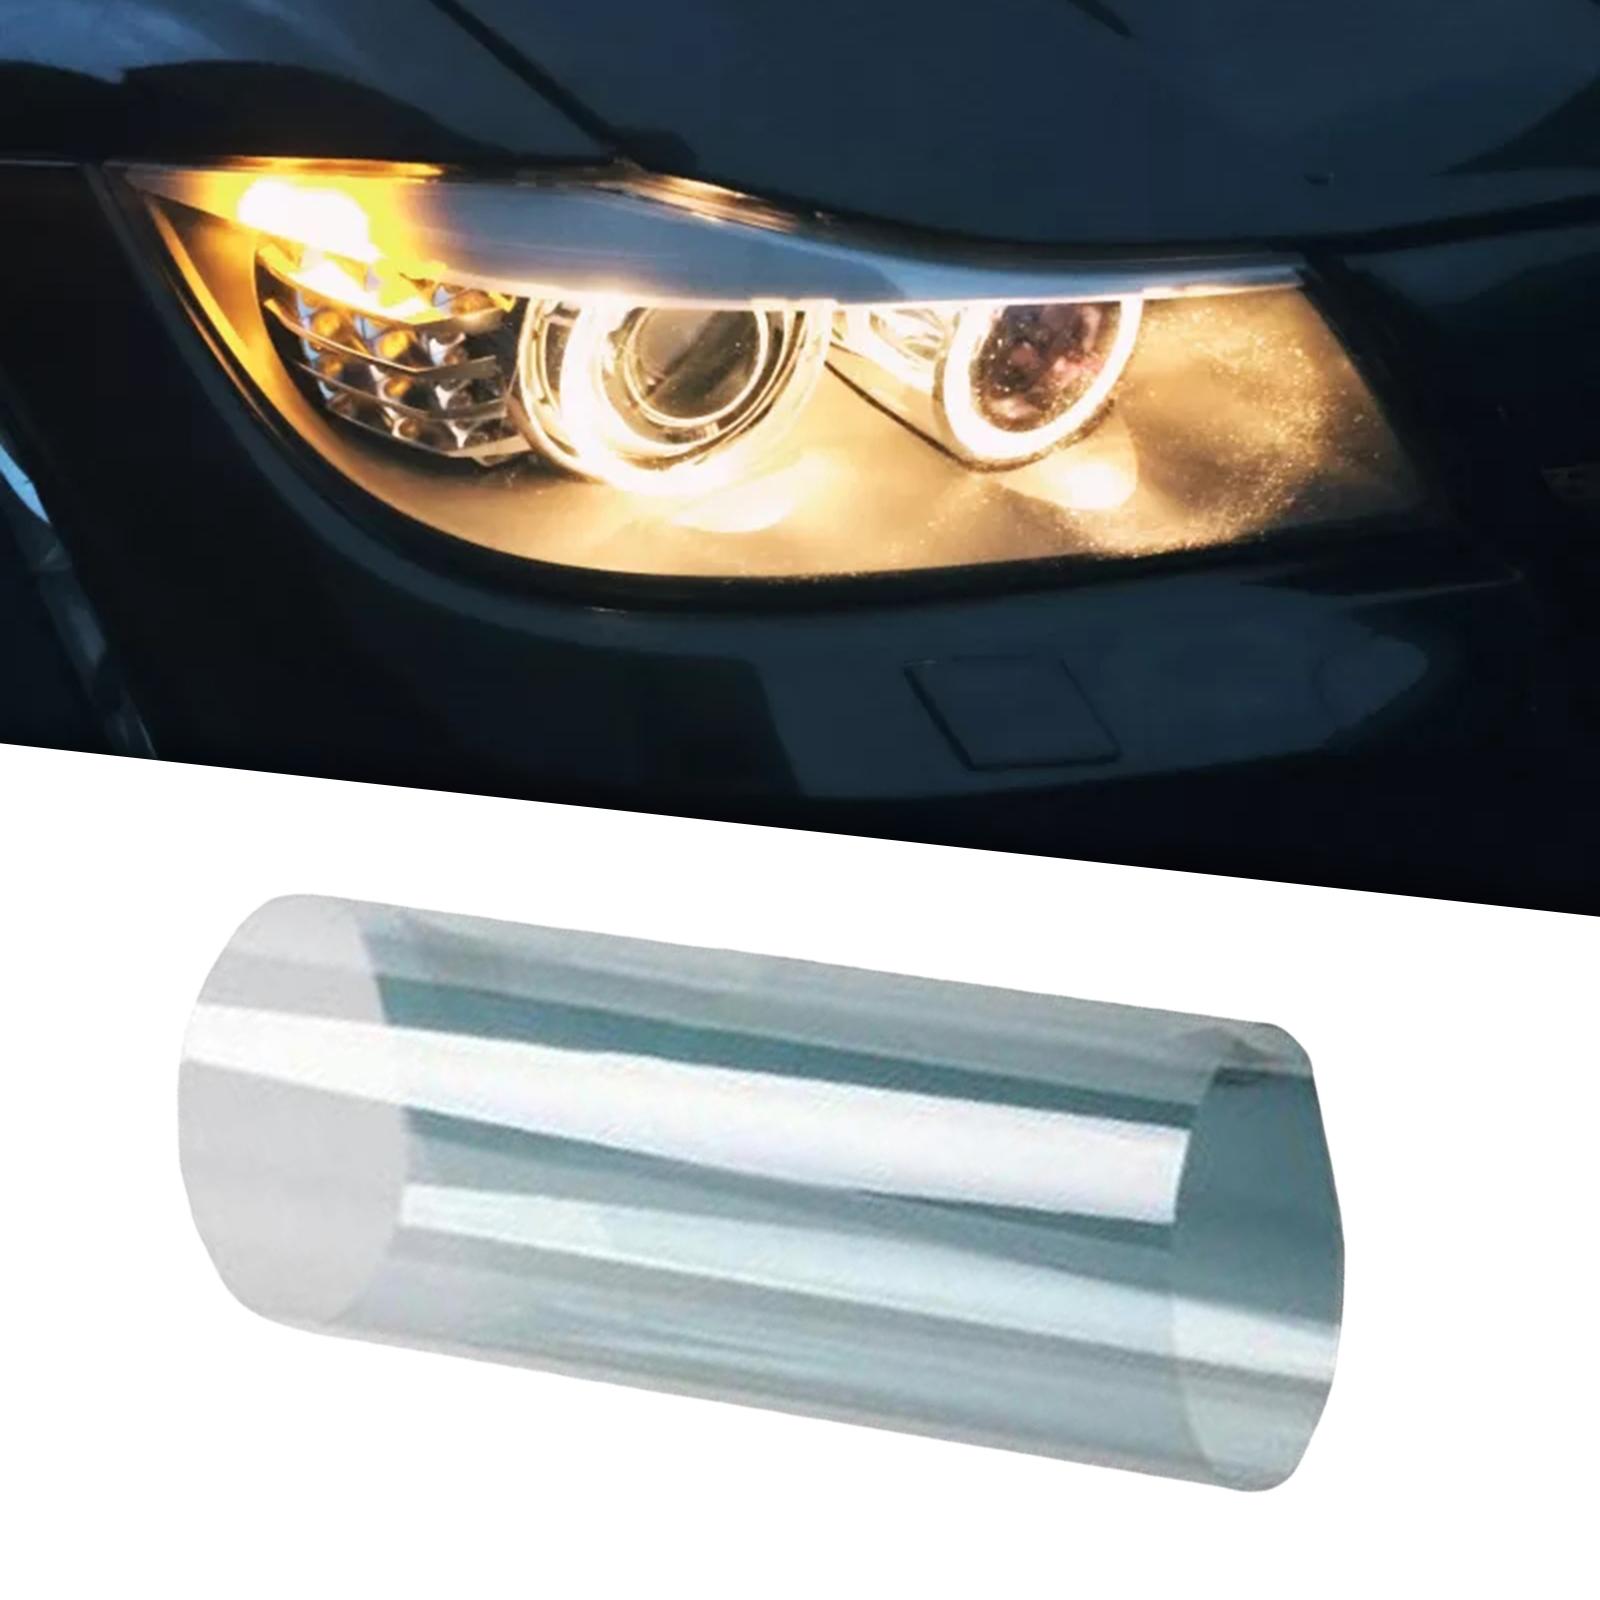 Headlight Protection Film Accessory for Vehicle Taillight Car Headlight